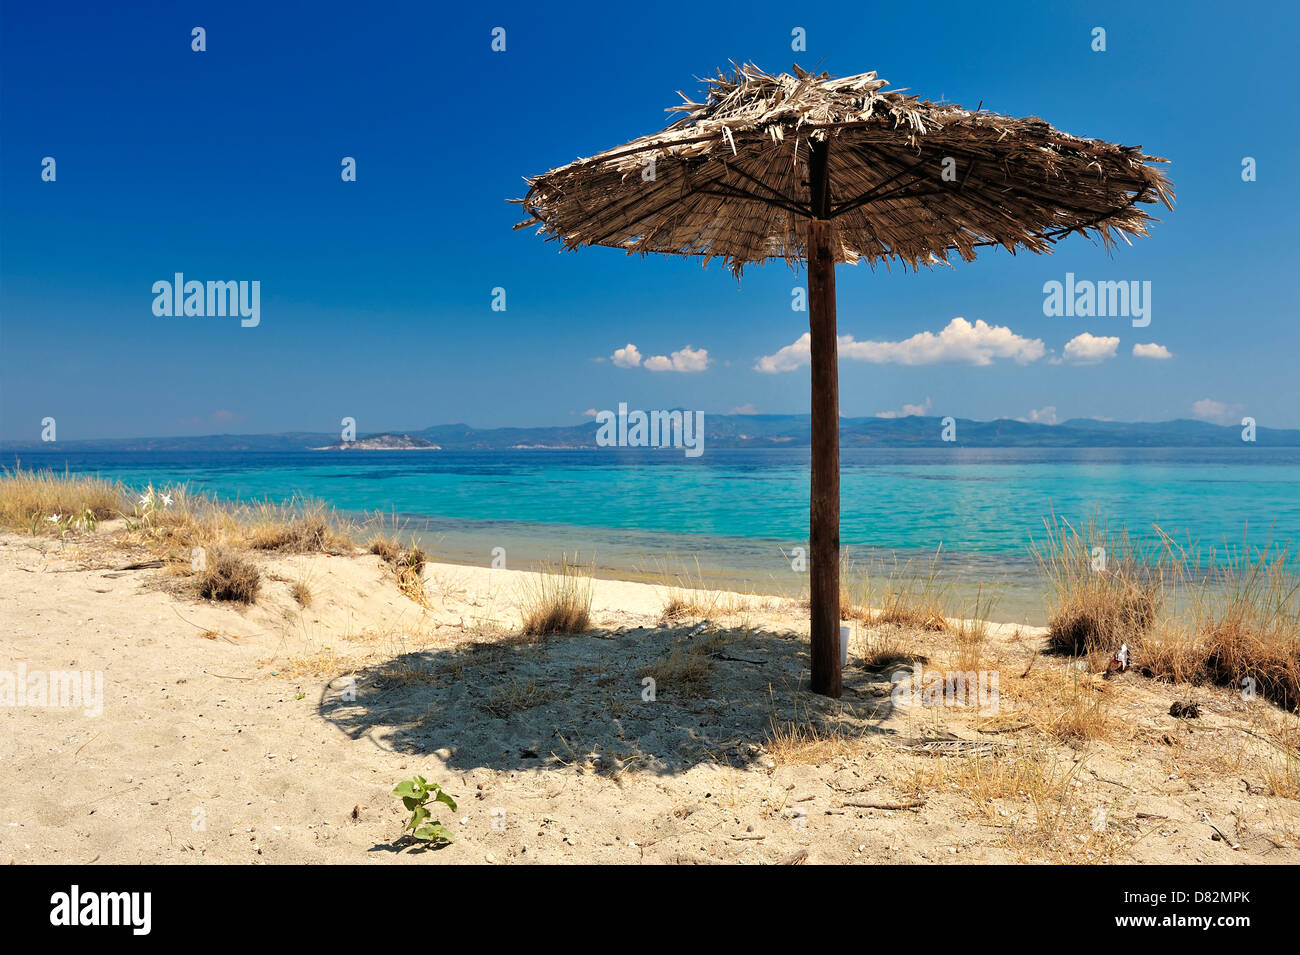 Beach umbrella on a sunny day, sea in background Stock Photo